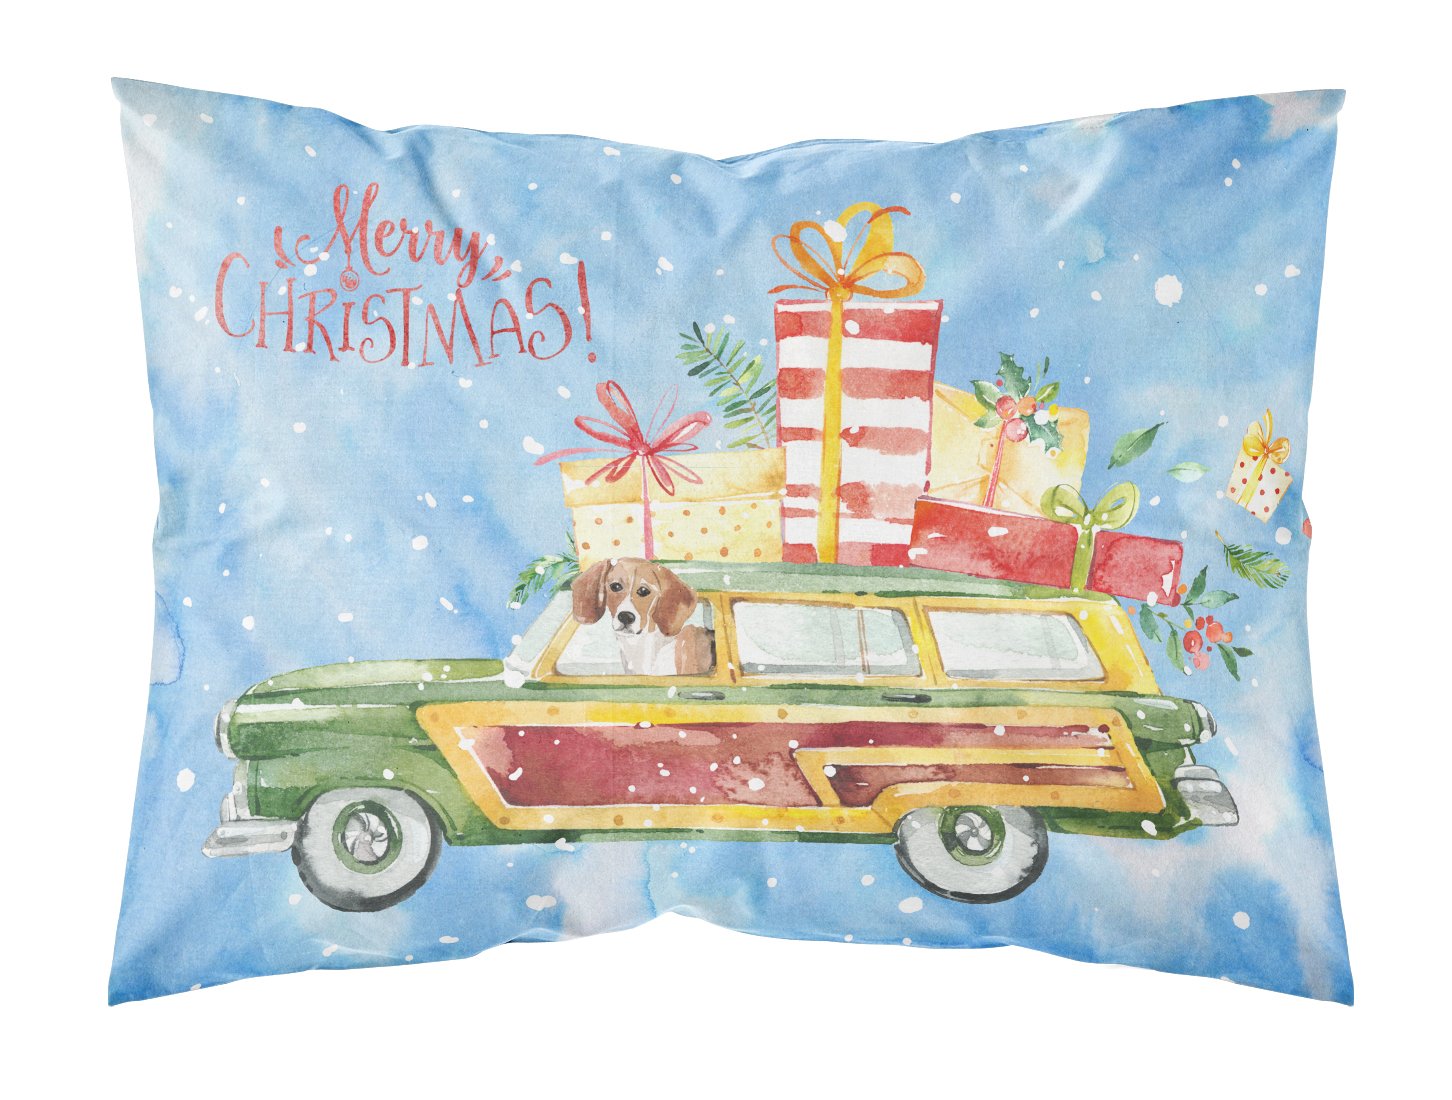 Merry Christmas Beagle Fabric Standard Pillowcase CK2442PILLOWCASE by Caroline's Treasures